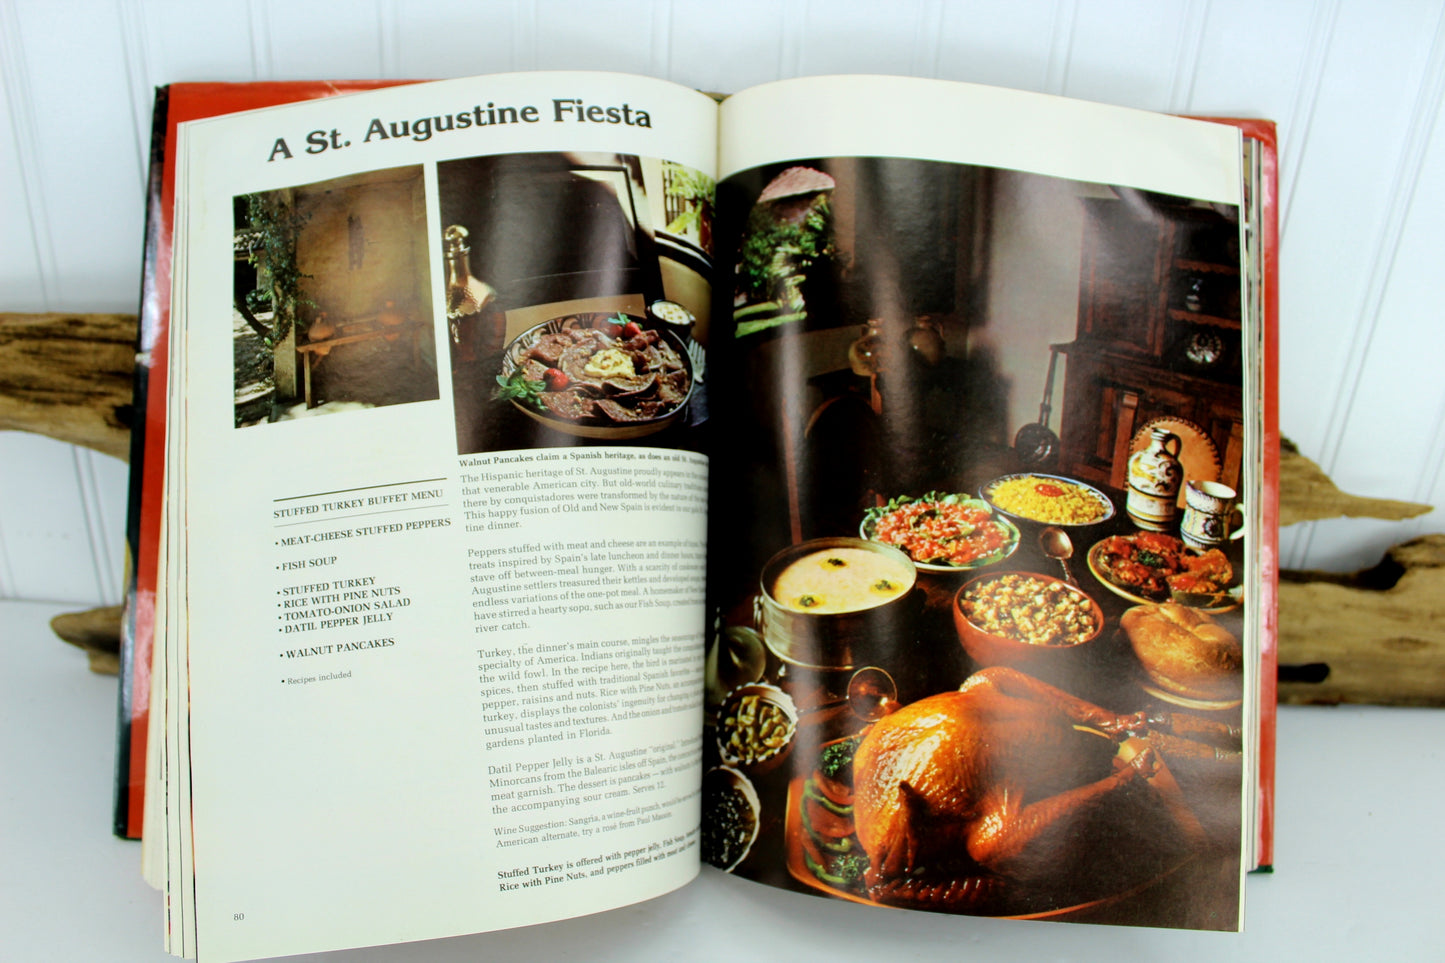 Vintage Cookbook Entertaining Internationally 1977 International Party Event 32 Menus Sphere Magazine